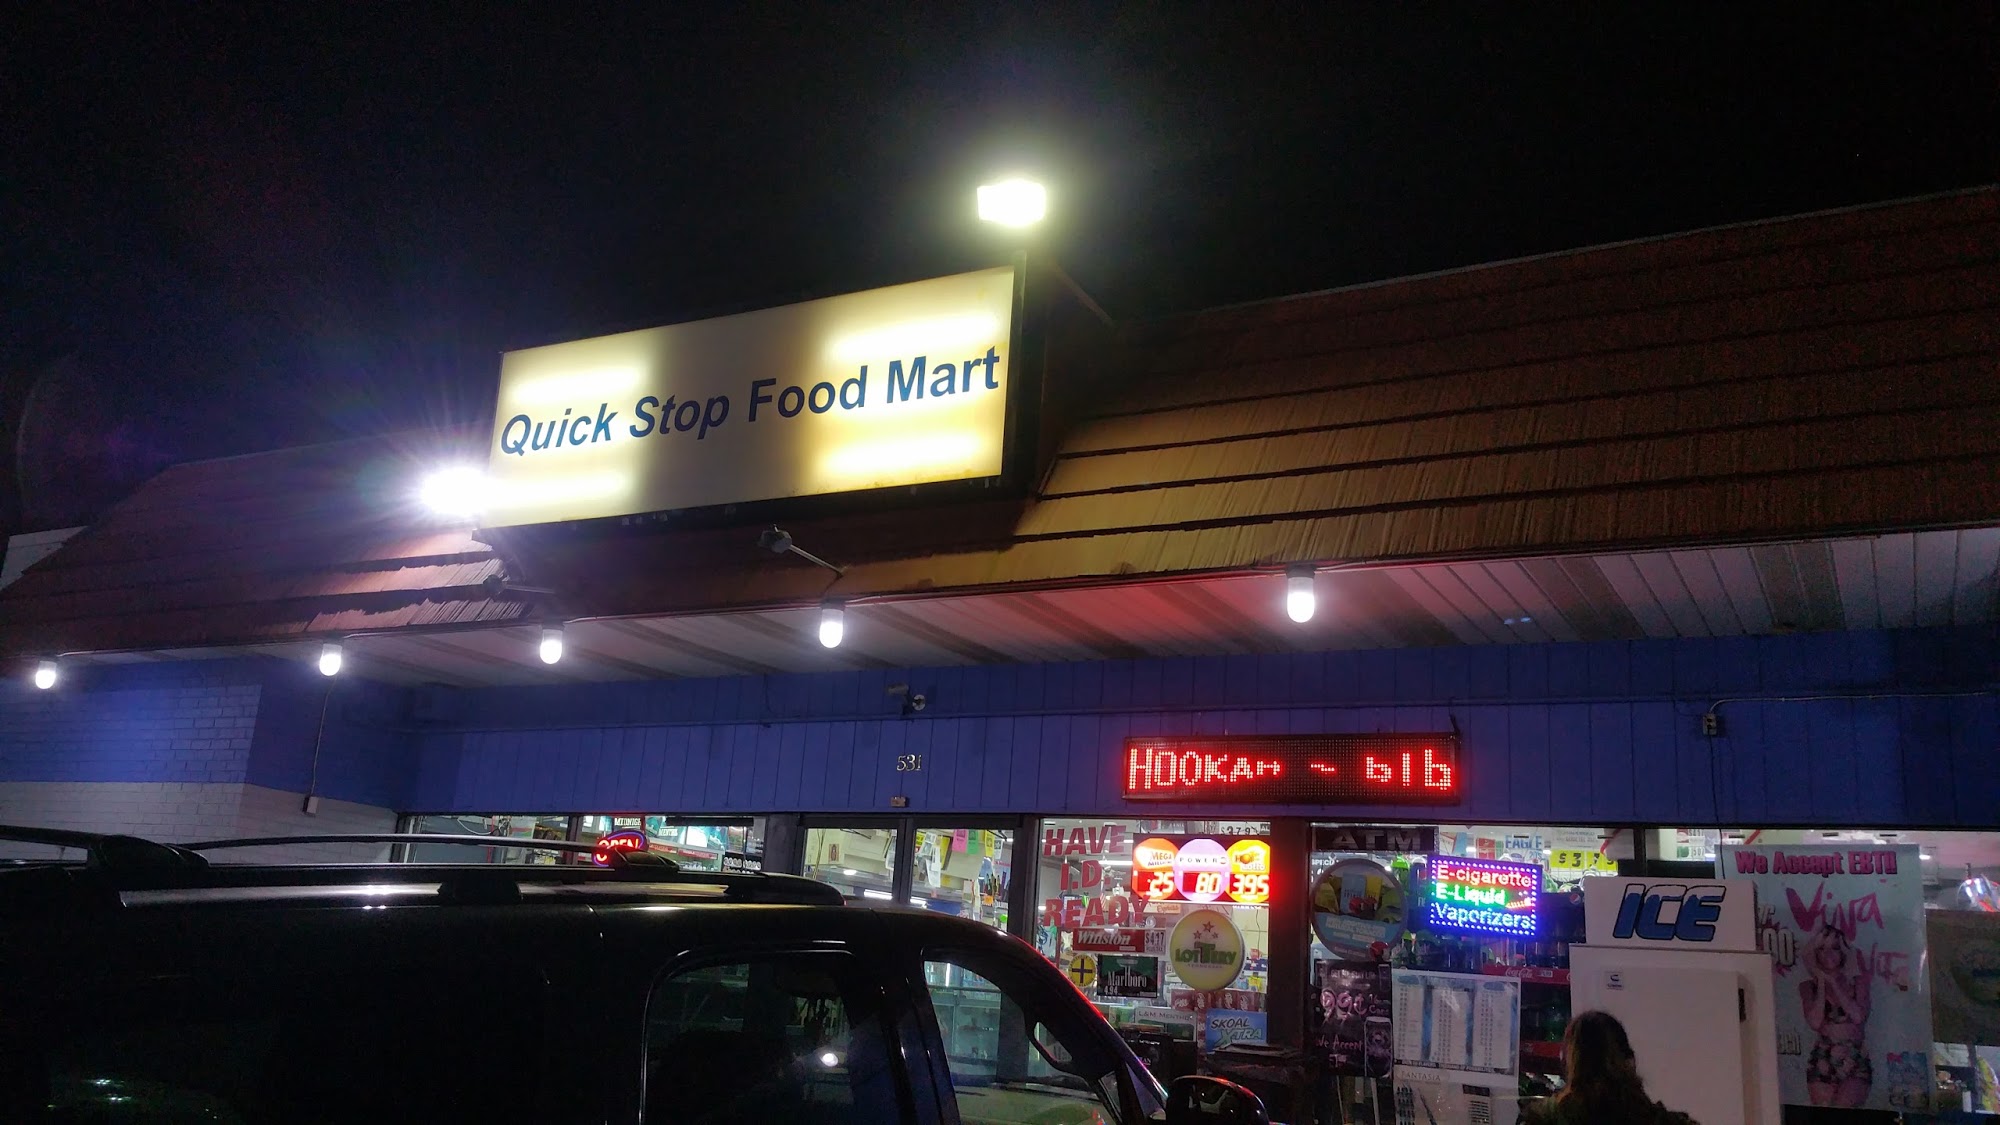 Quick Stop Food Mart